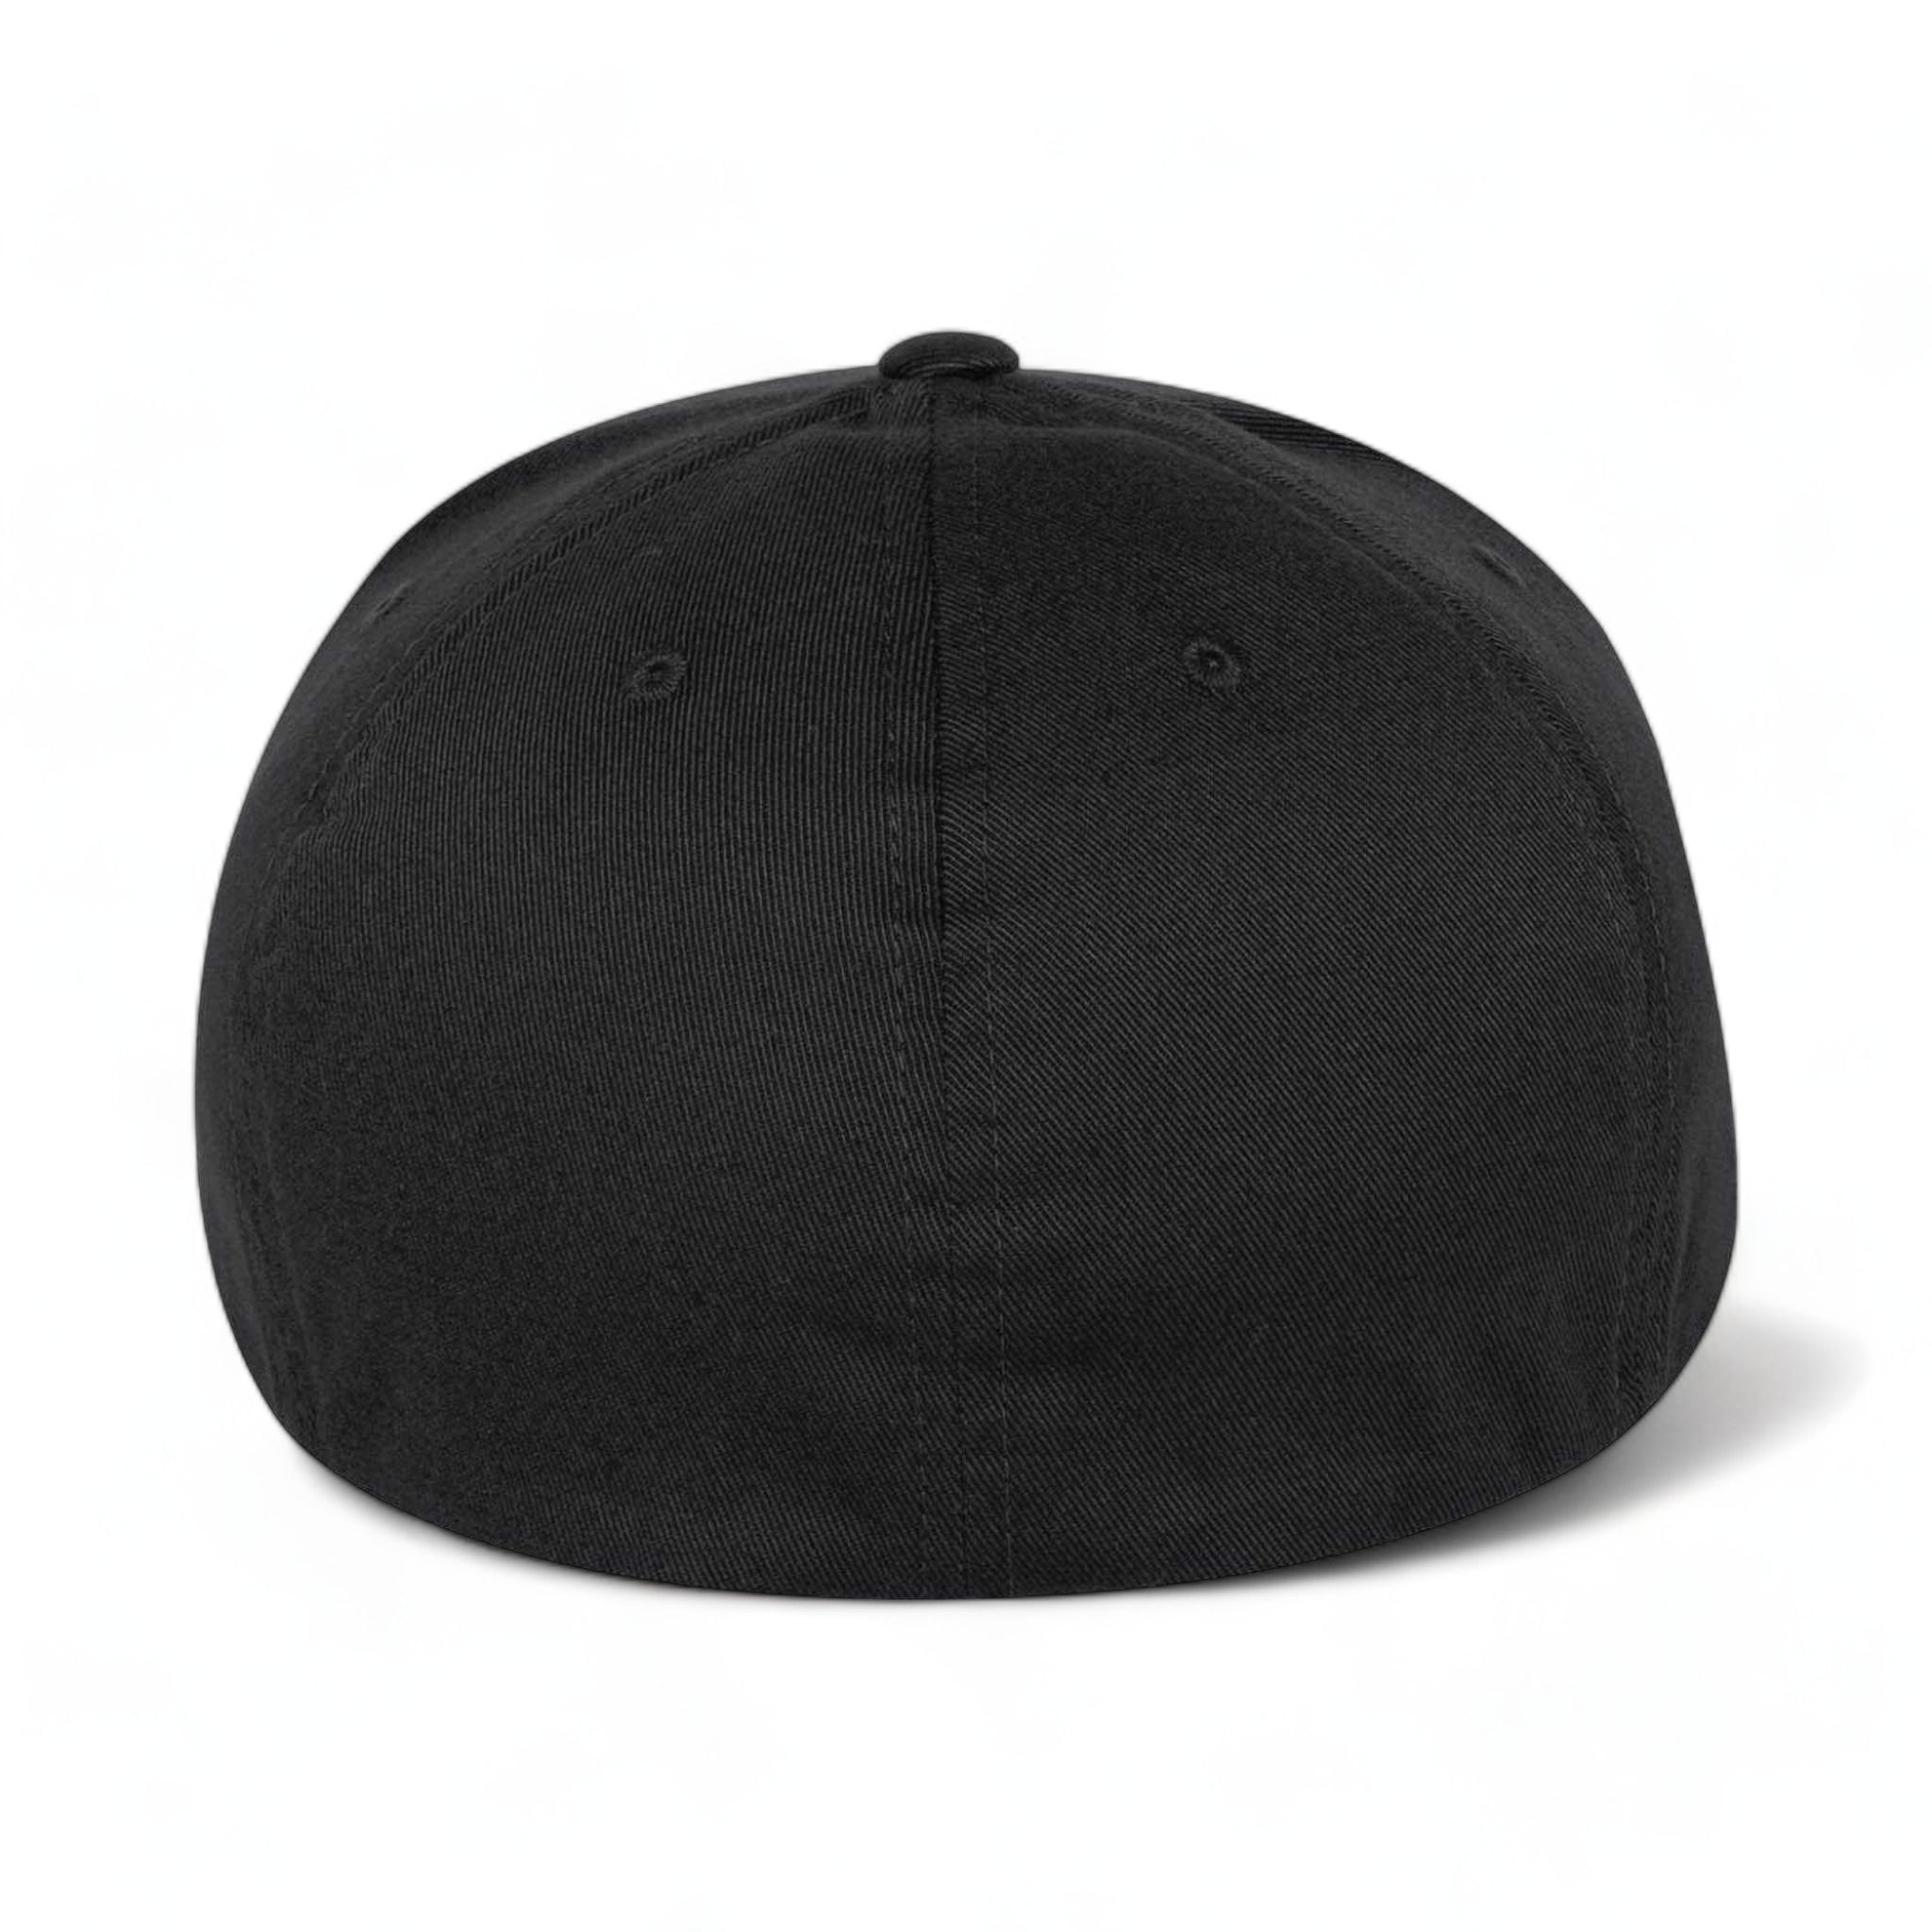 Back view of Flexfit 6297f custom hat in black